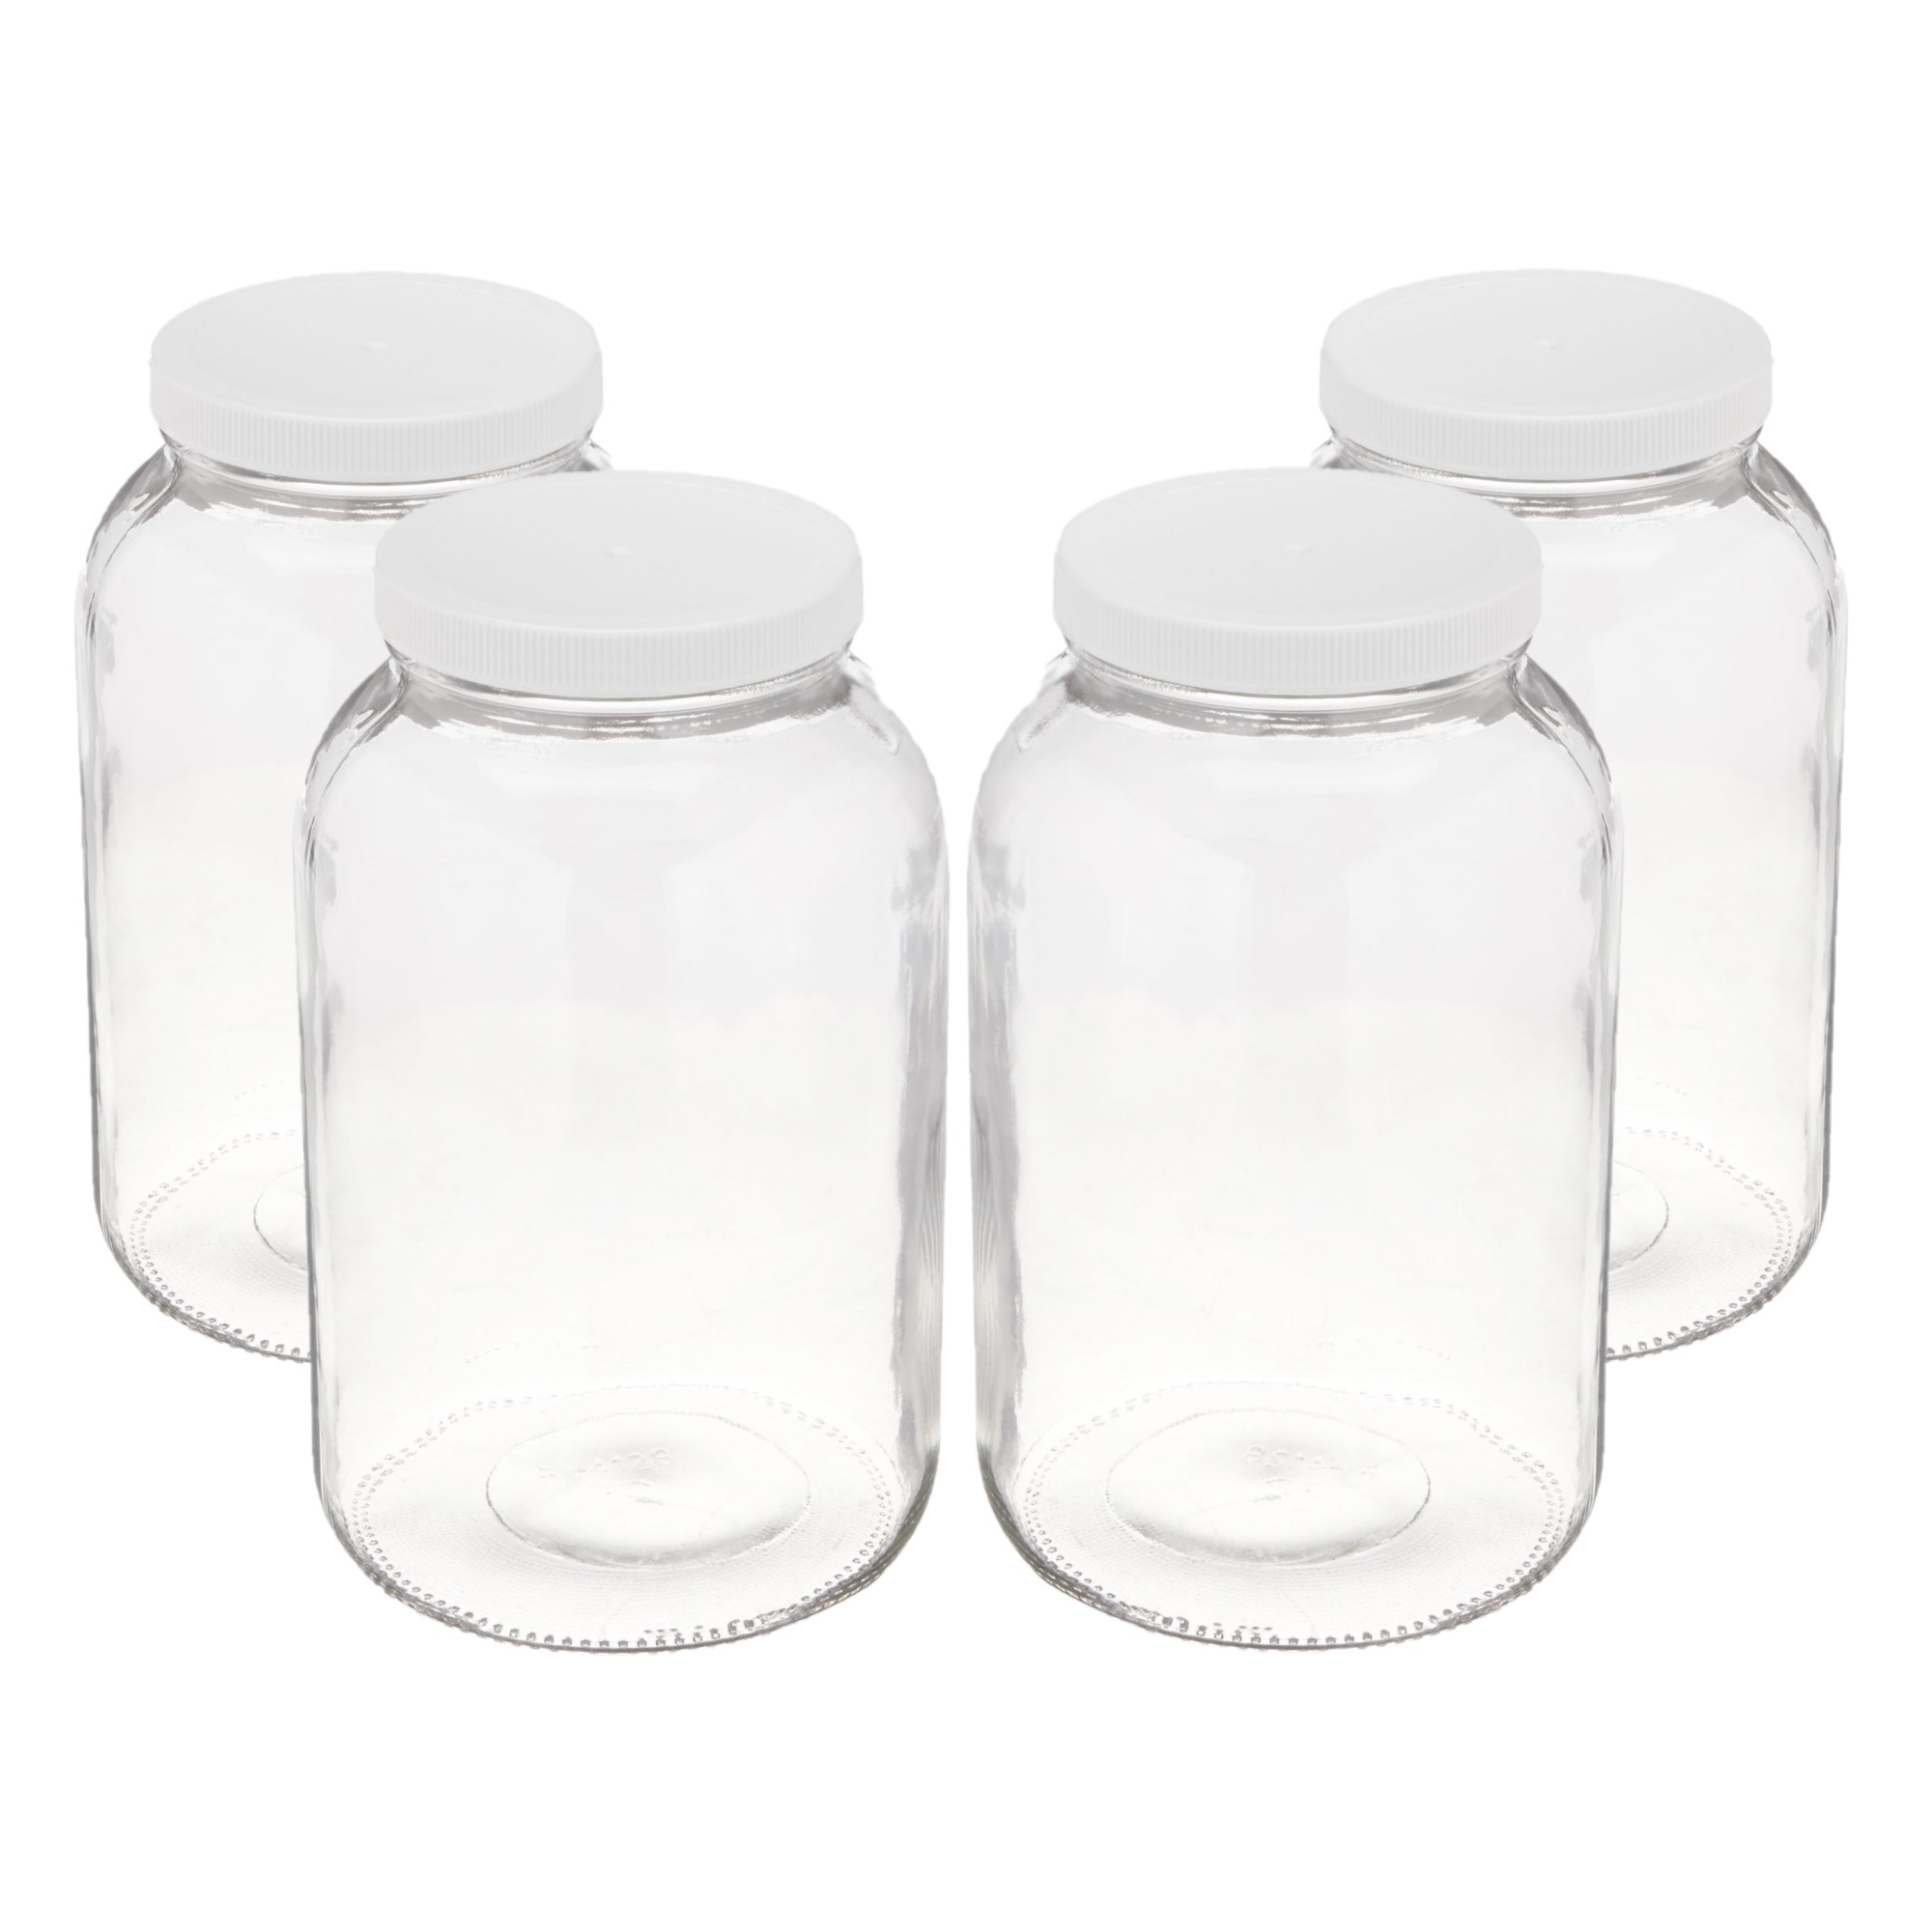 https://buchabrewers.com/wp-content/uploads/2018/08/4-Pack-Gallon-Glass-Jars-for-Kombucha.jpg